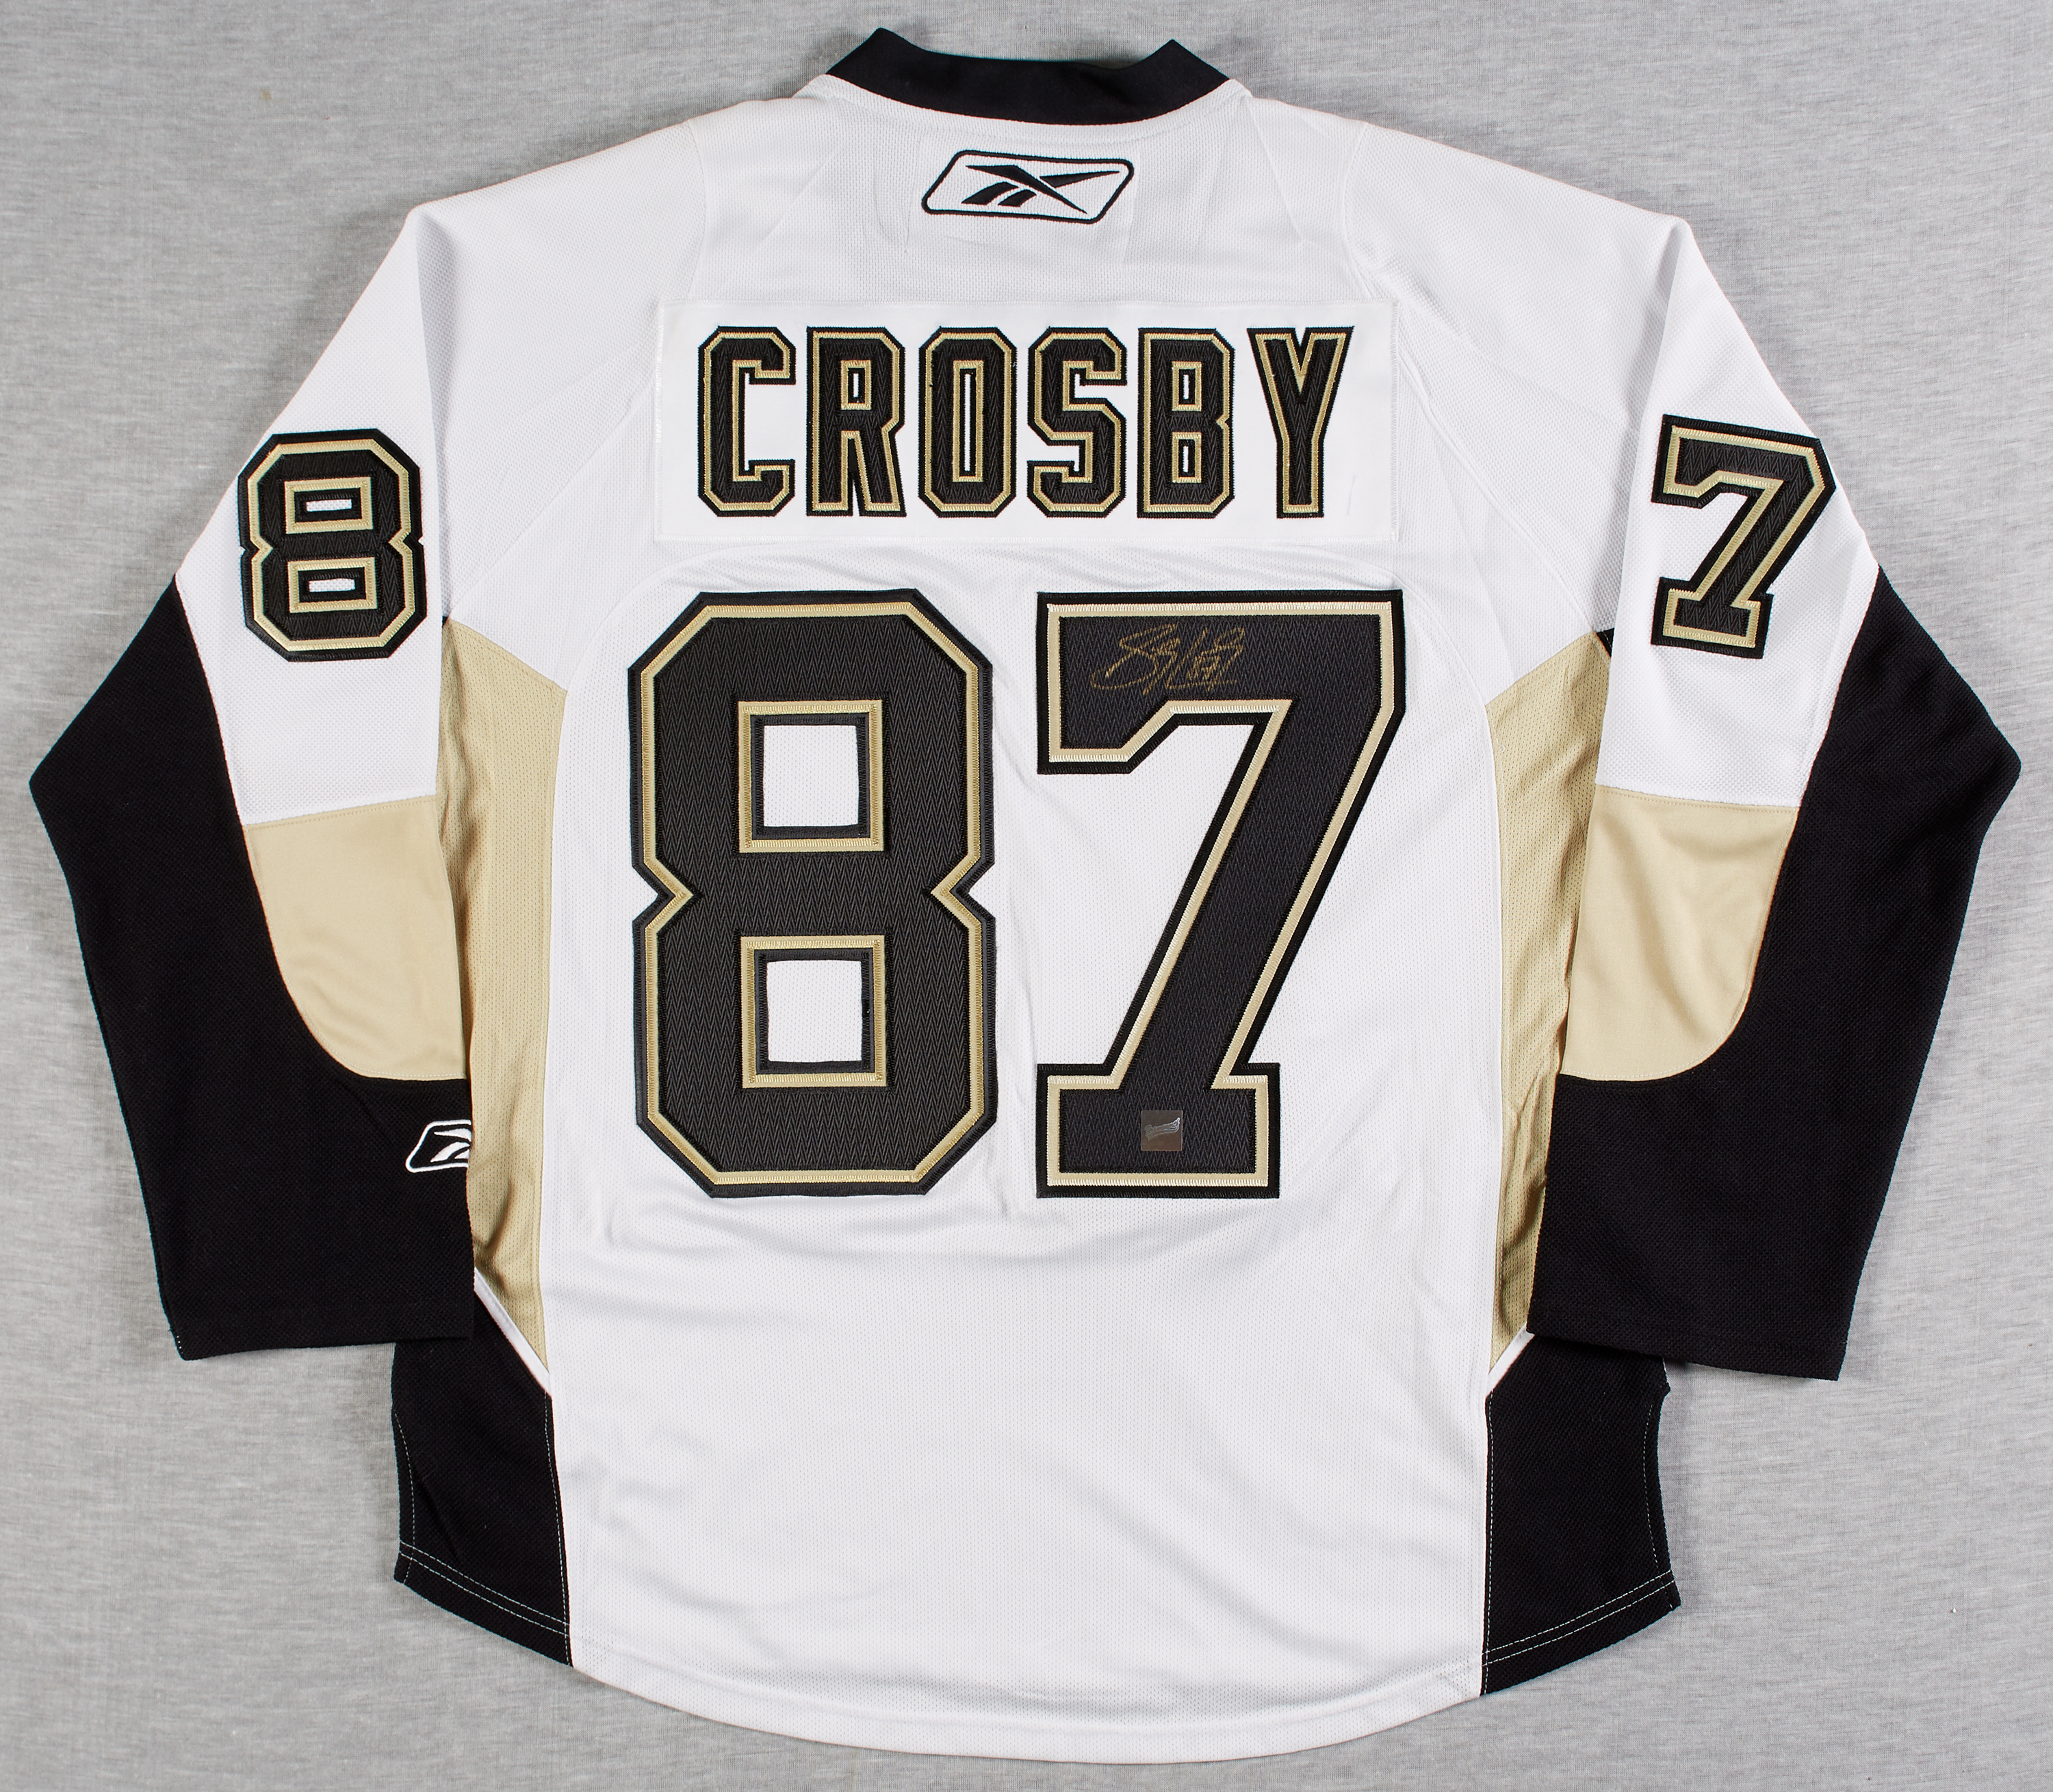 Sidney Crosby Autographed Jerseys